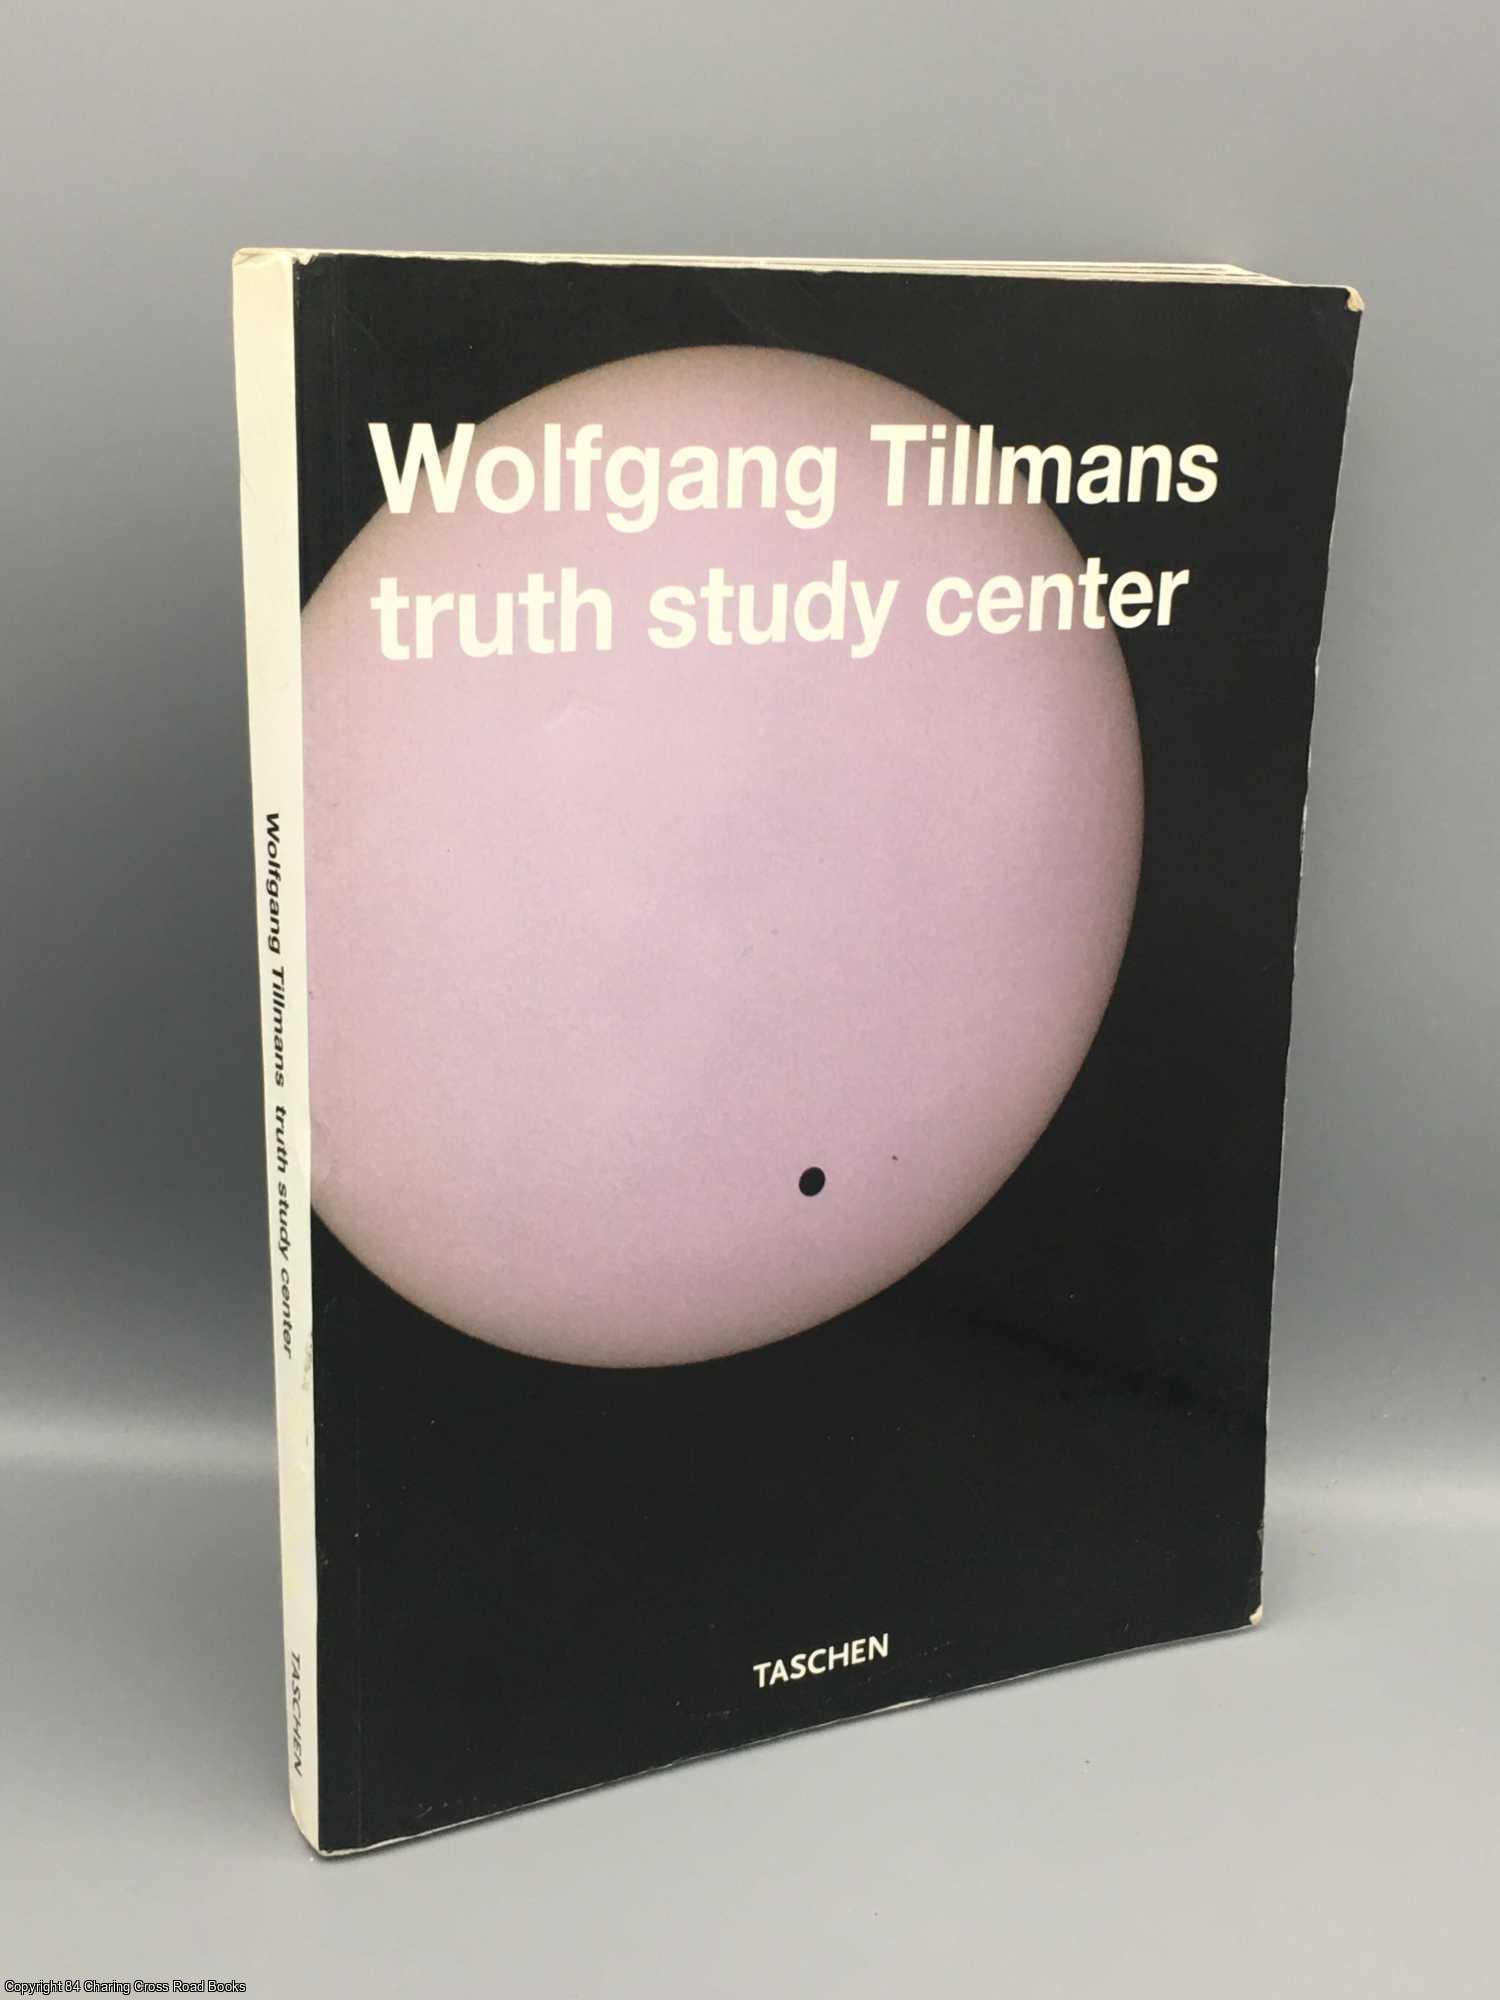 Shimizu; Tillmans, Wolfgang - Wolfgang Tillmans, Truth Study Center